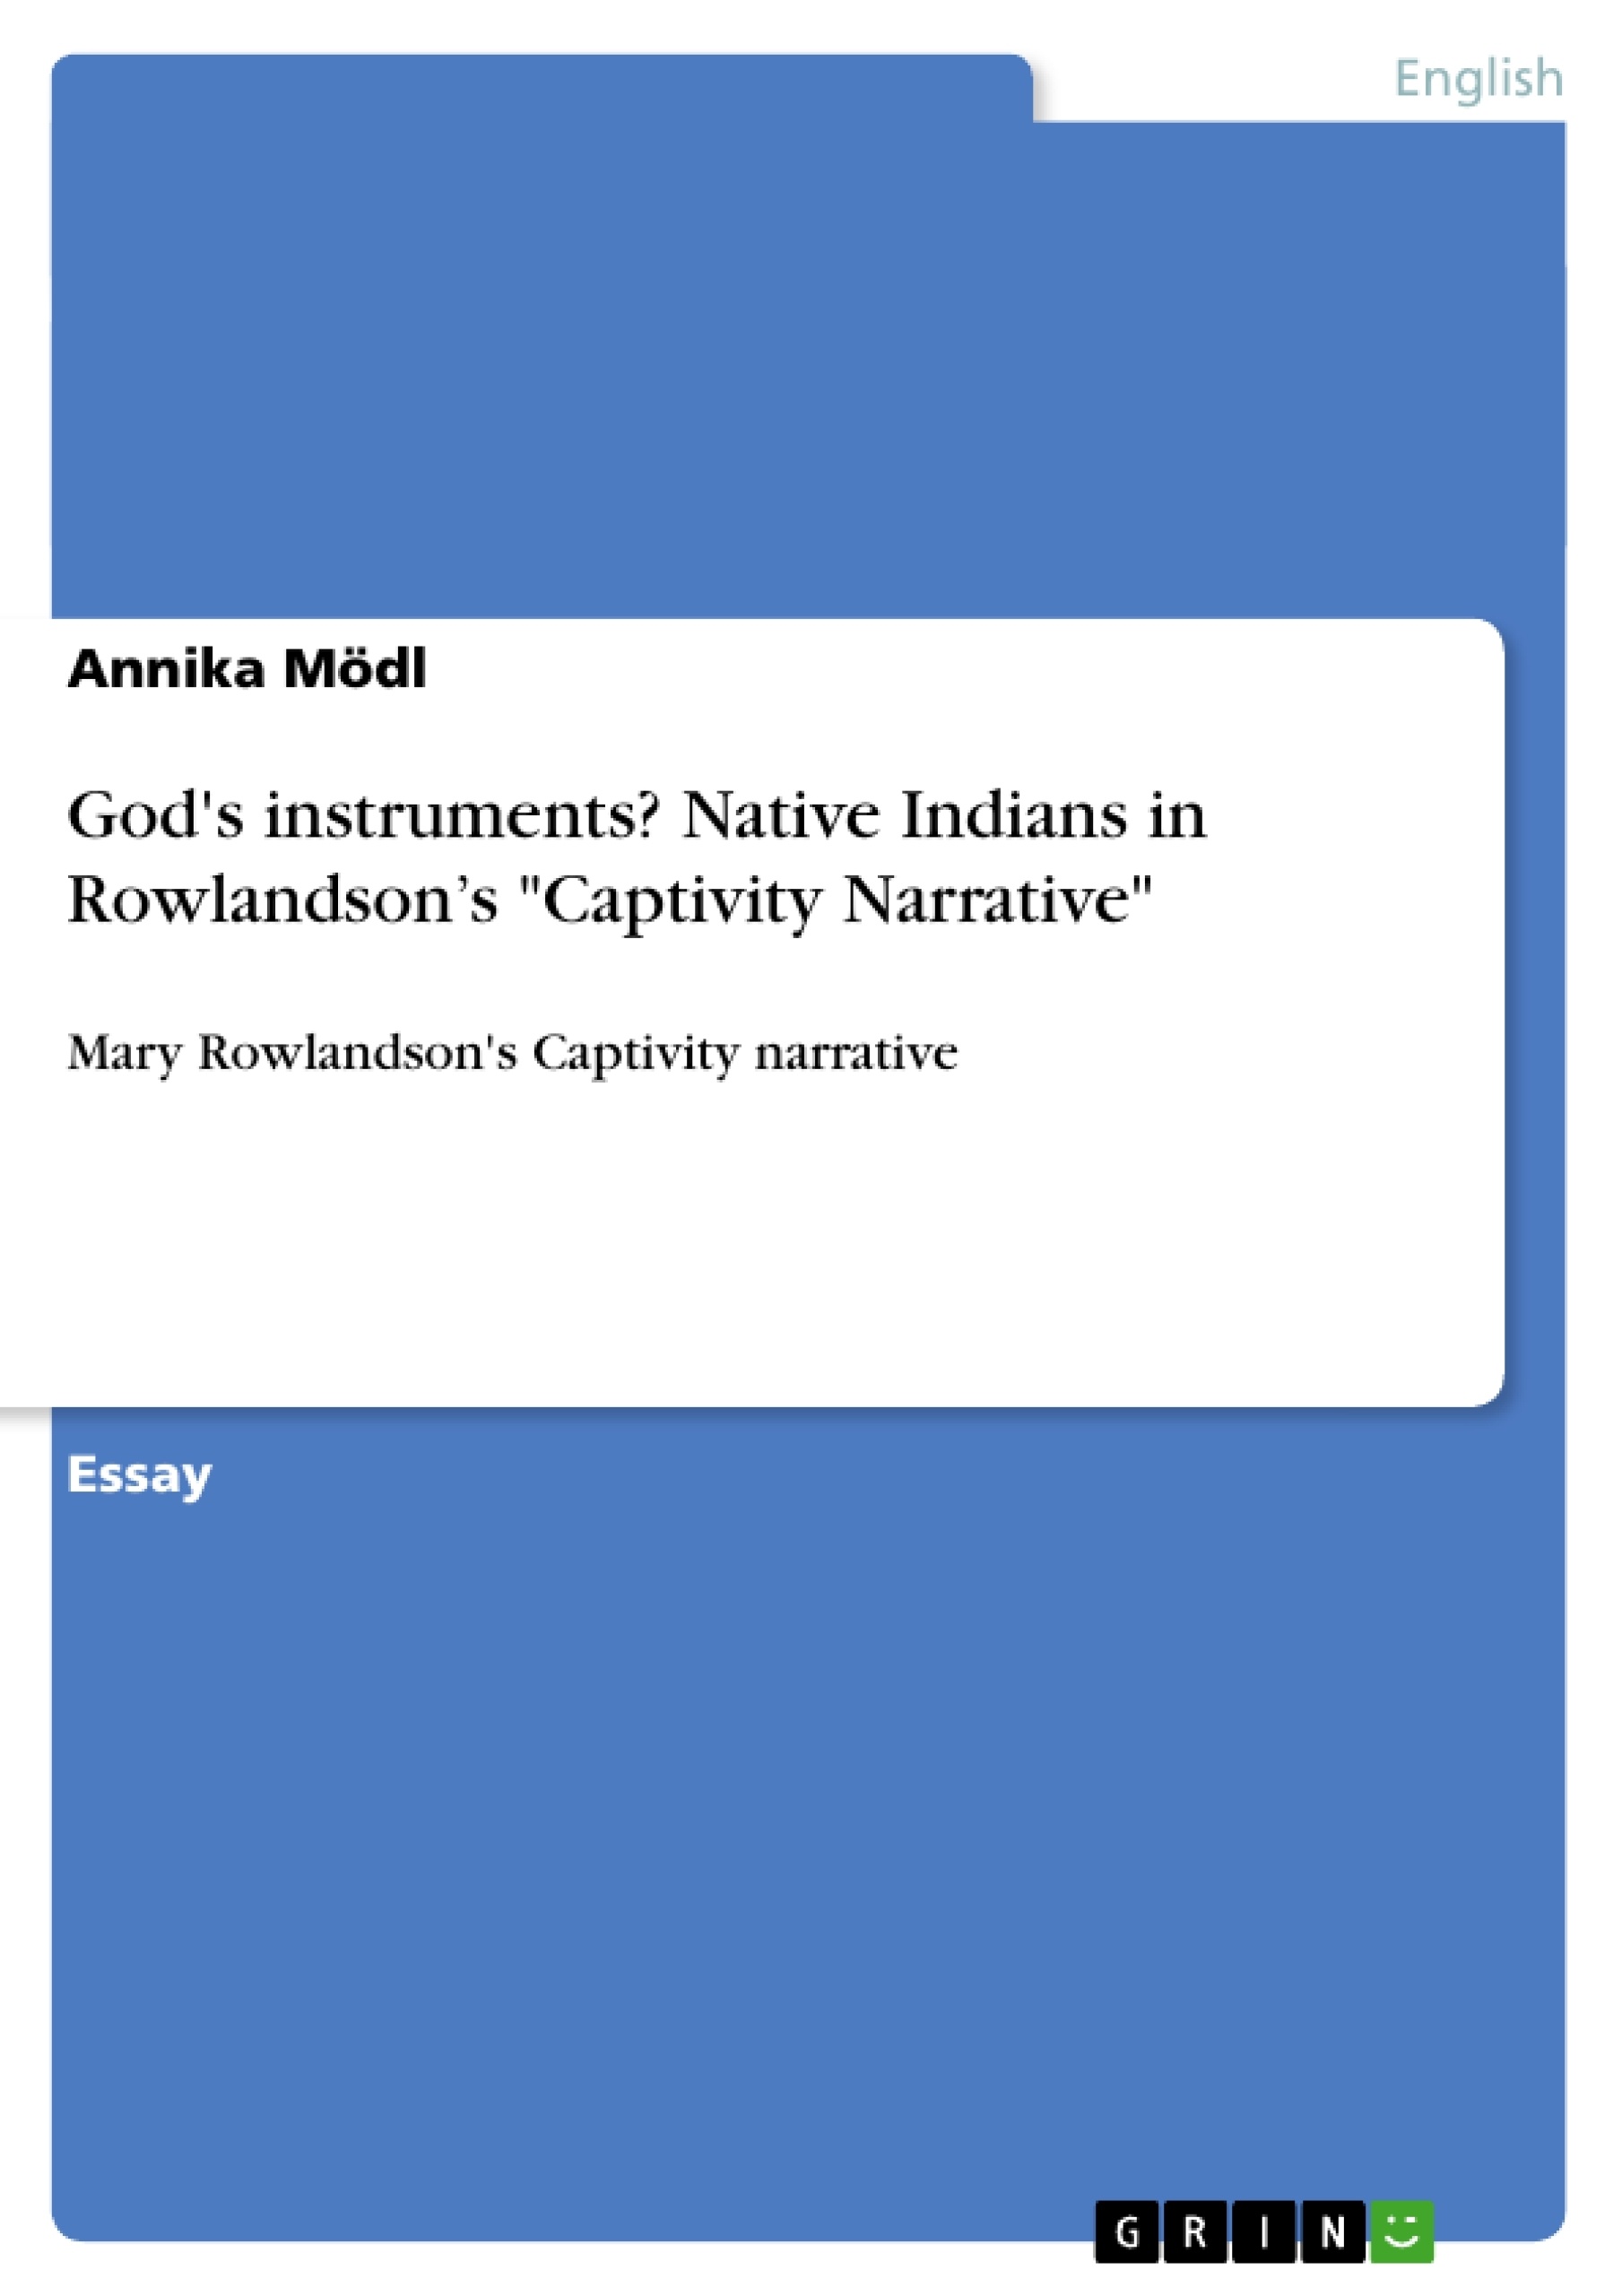 Titre: God's instruments? Native Indians in Rowlandson’s "Captivity Narrative"